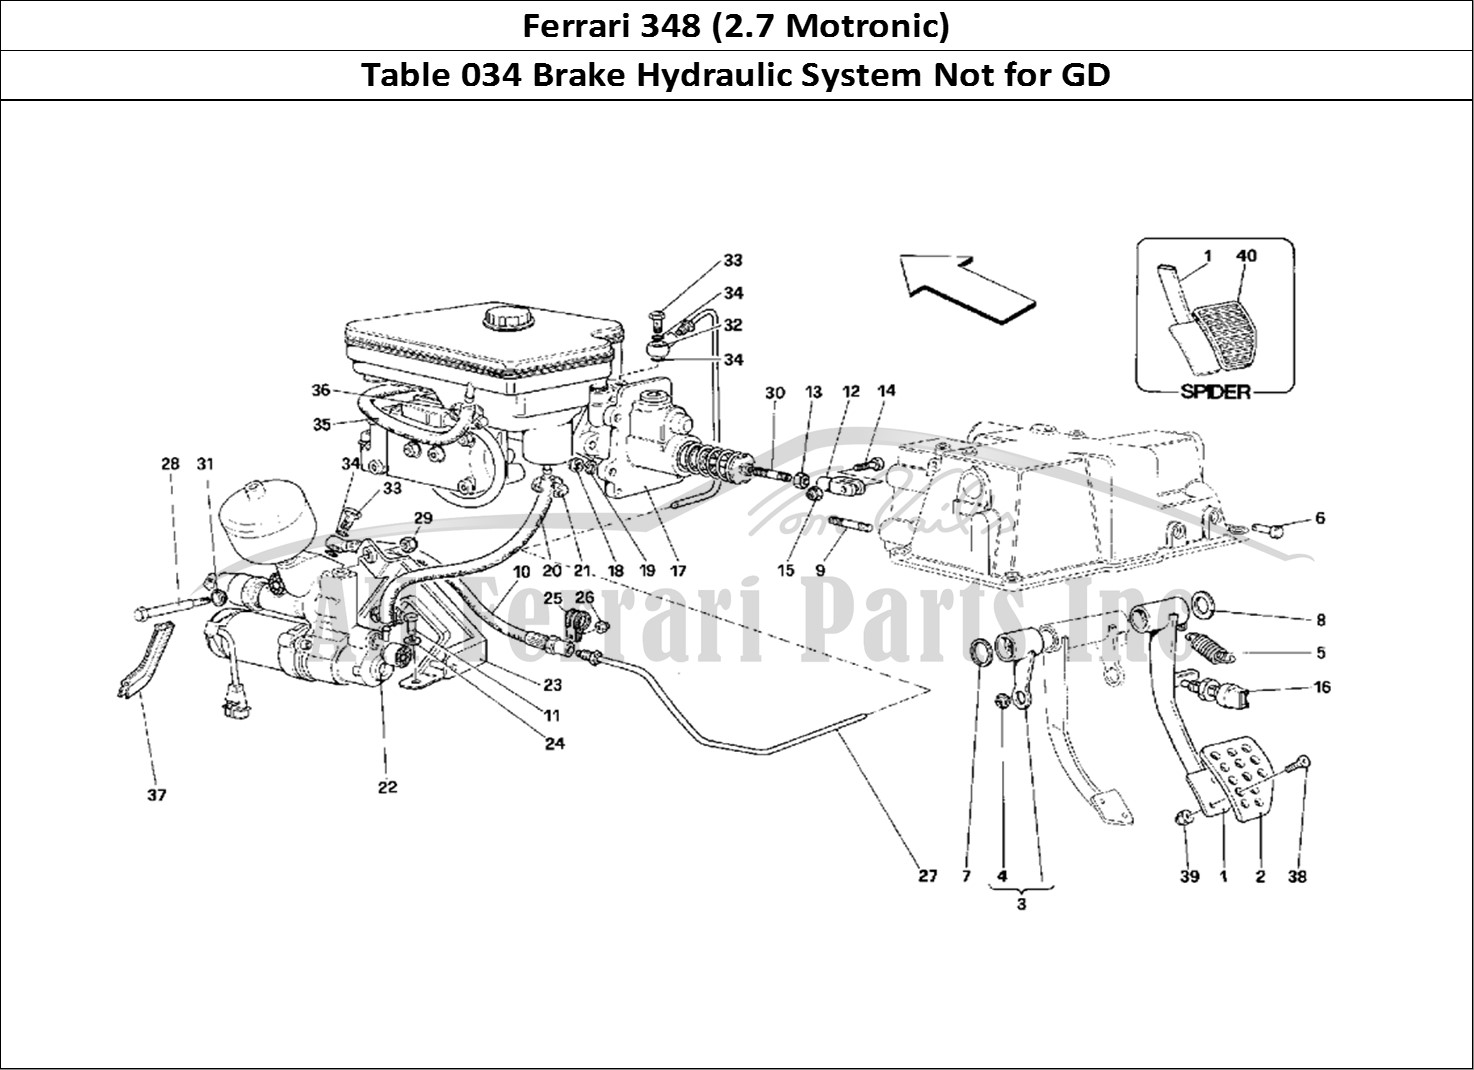 Ferrari Parts Ferrari 348 (2.7 Motronic) Page 034 Brake Hidraulic -Not for